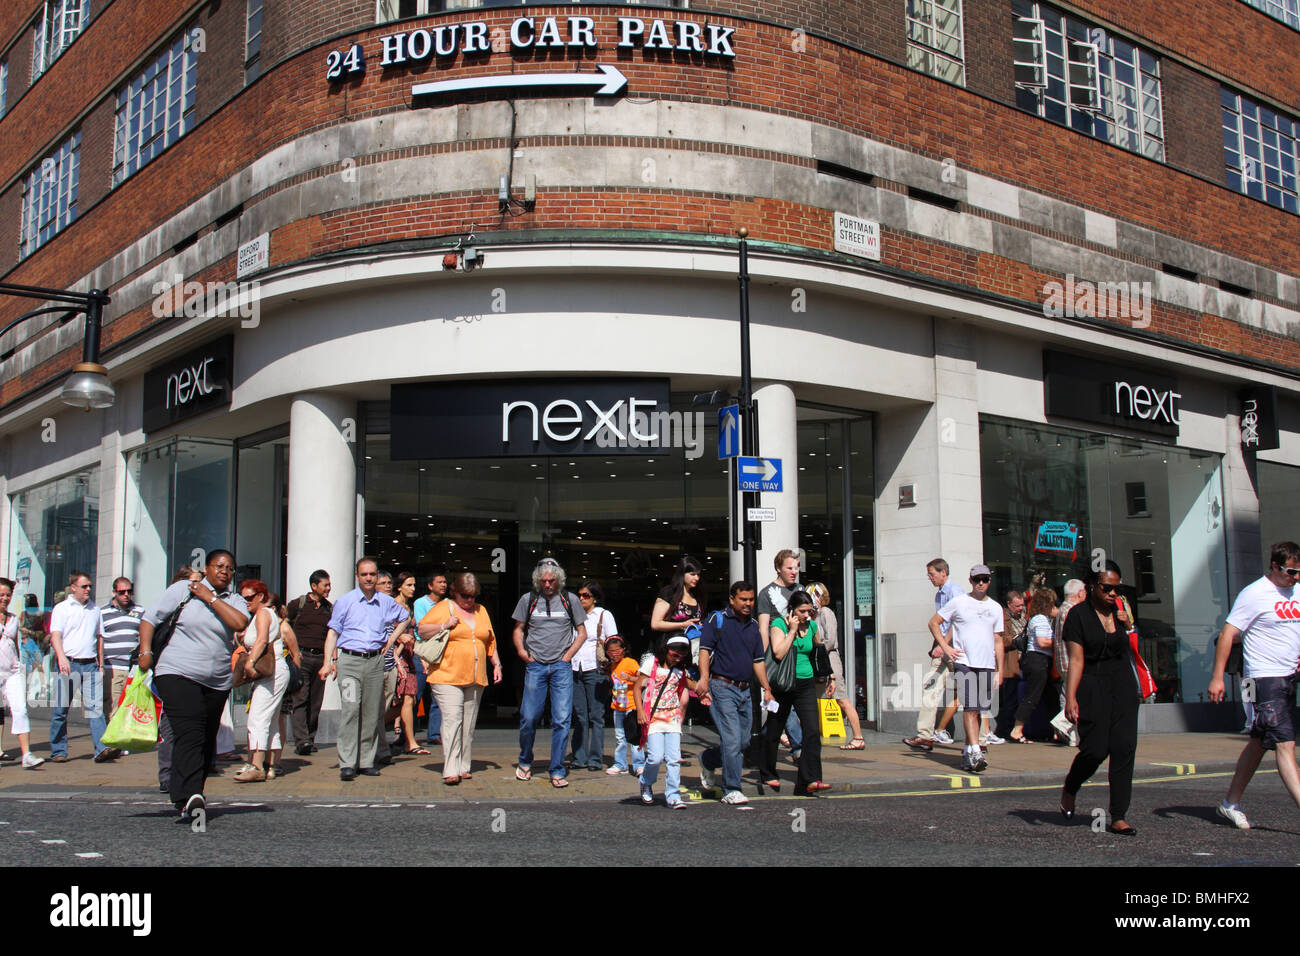 A Next store on Oxford Street, London, England, U.K. Stock Photo